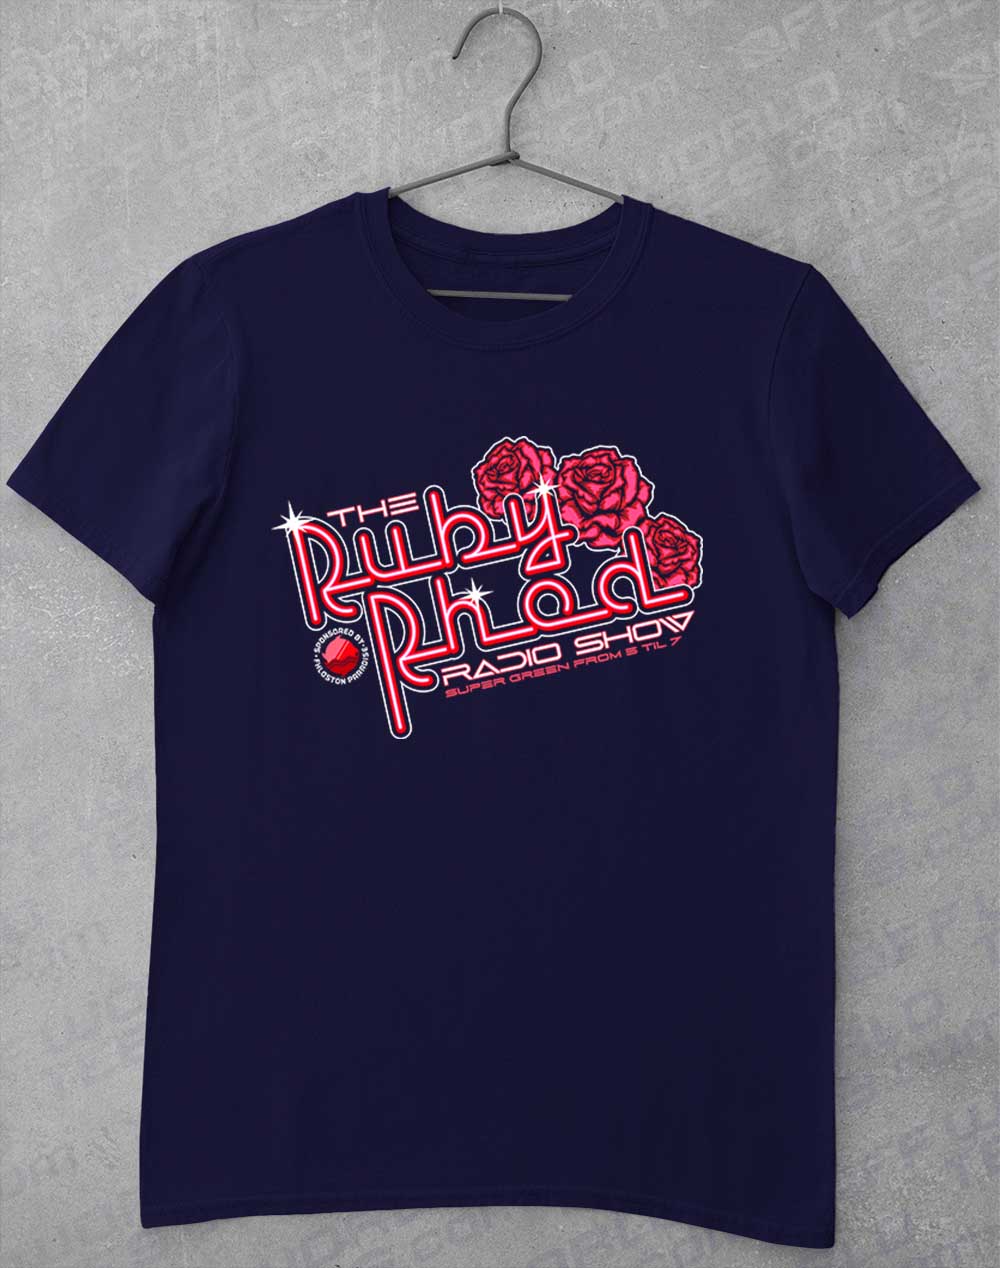 Navy - Ruby Rhod Radio Show T-Shirt